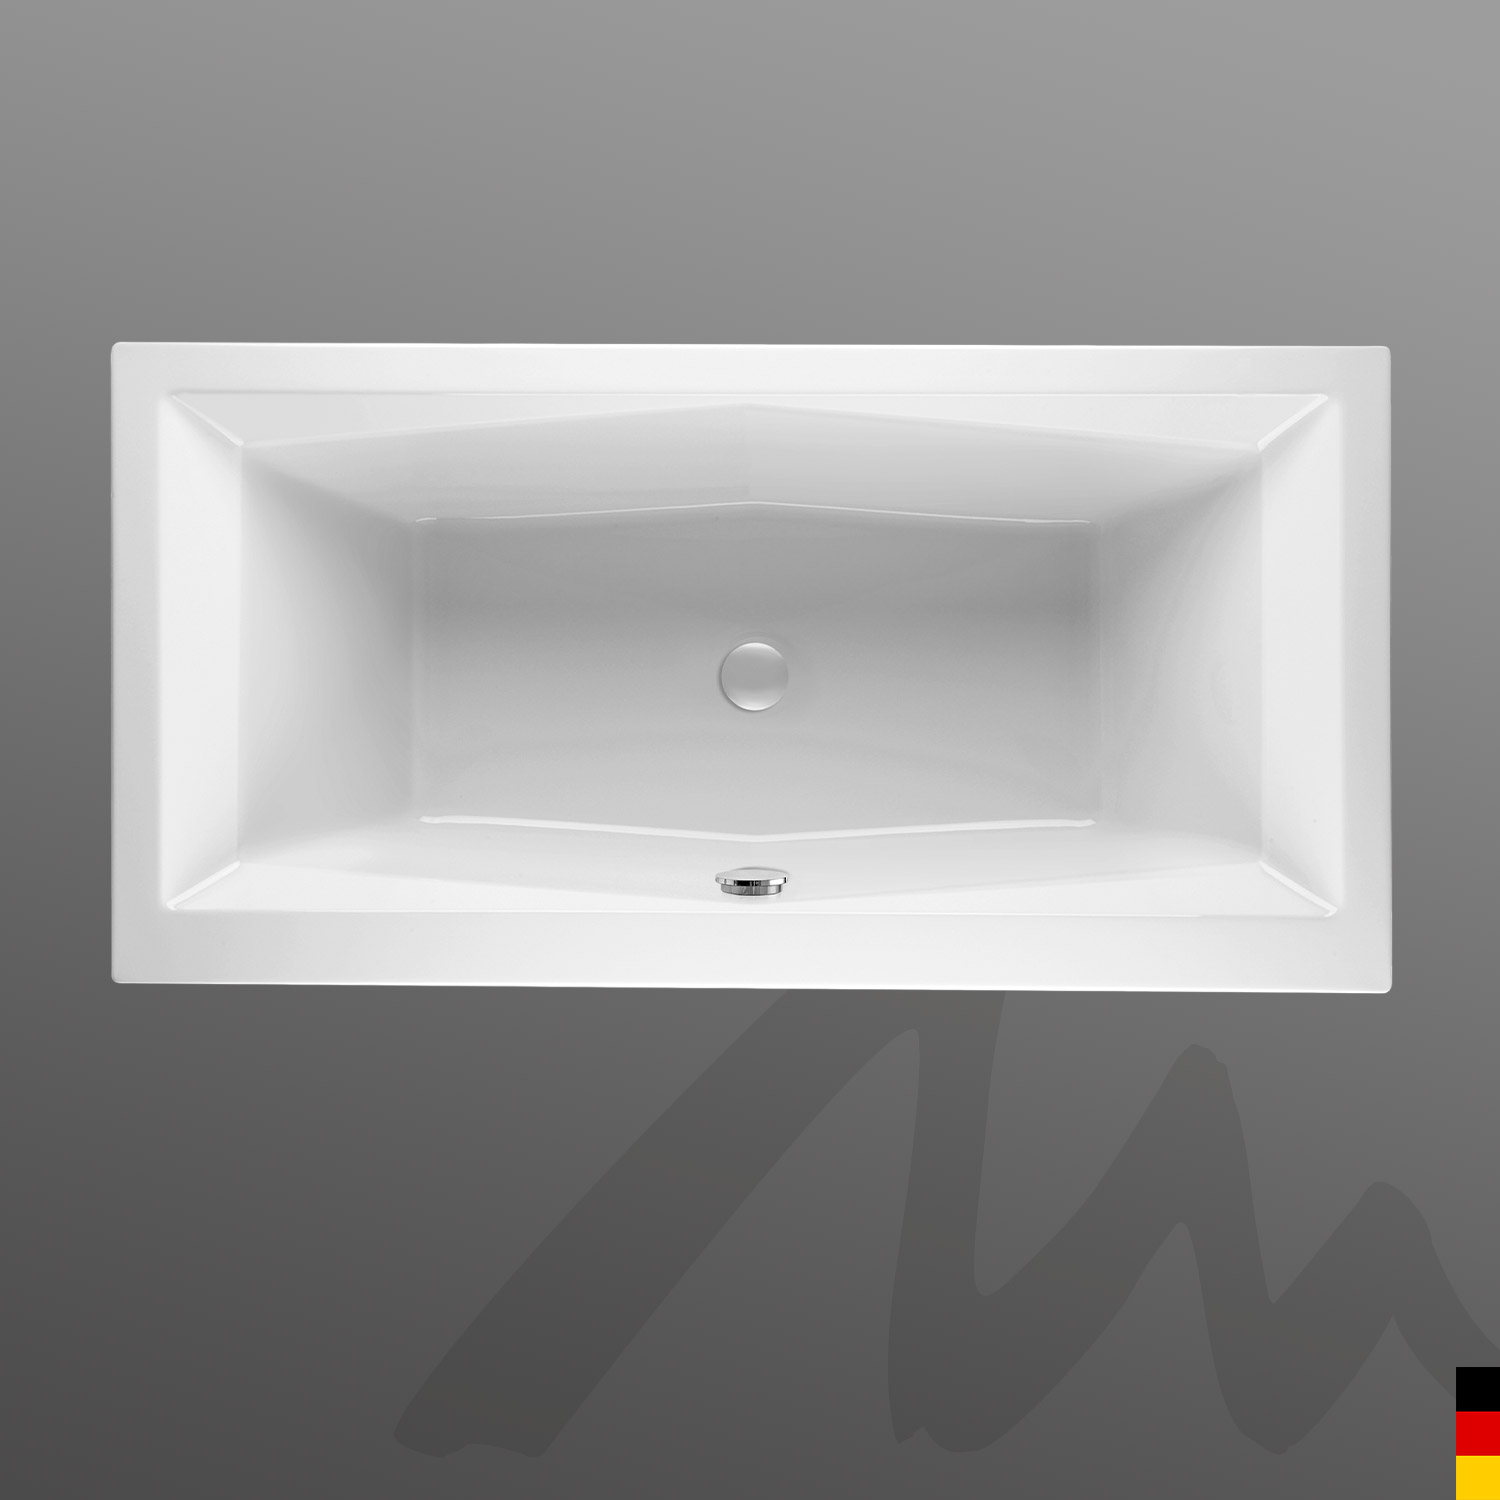 Mauersberger Badewanne Rechteck Duoformis 180/90  180x90x48cm  Farbe:weiß